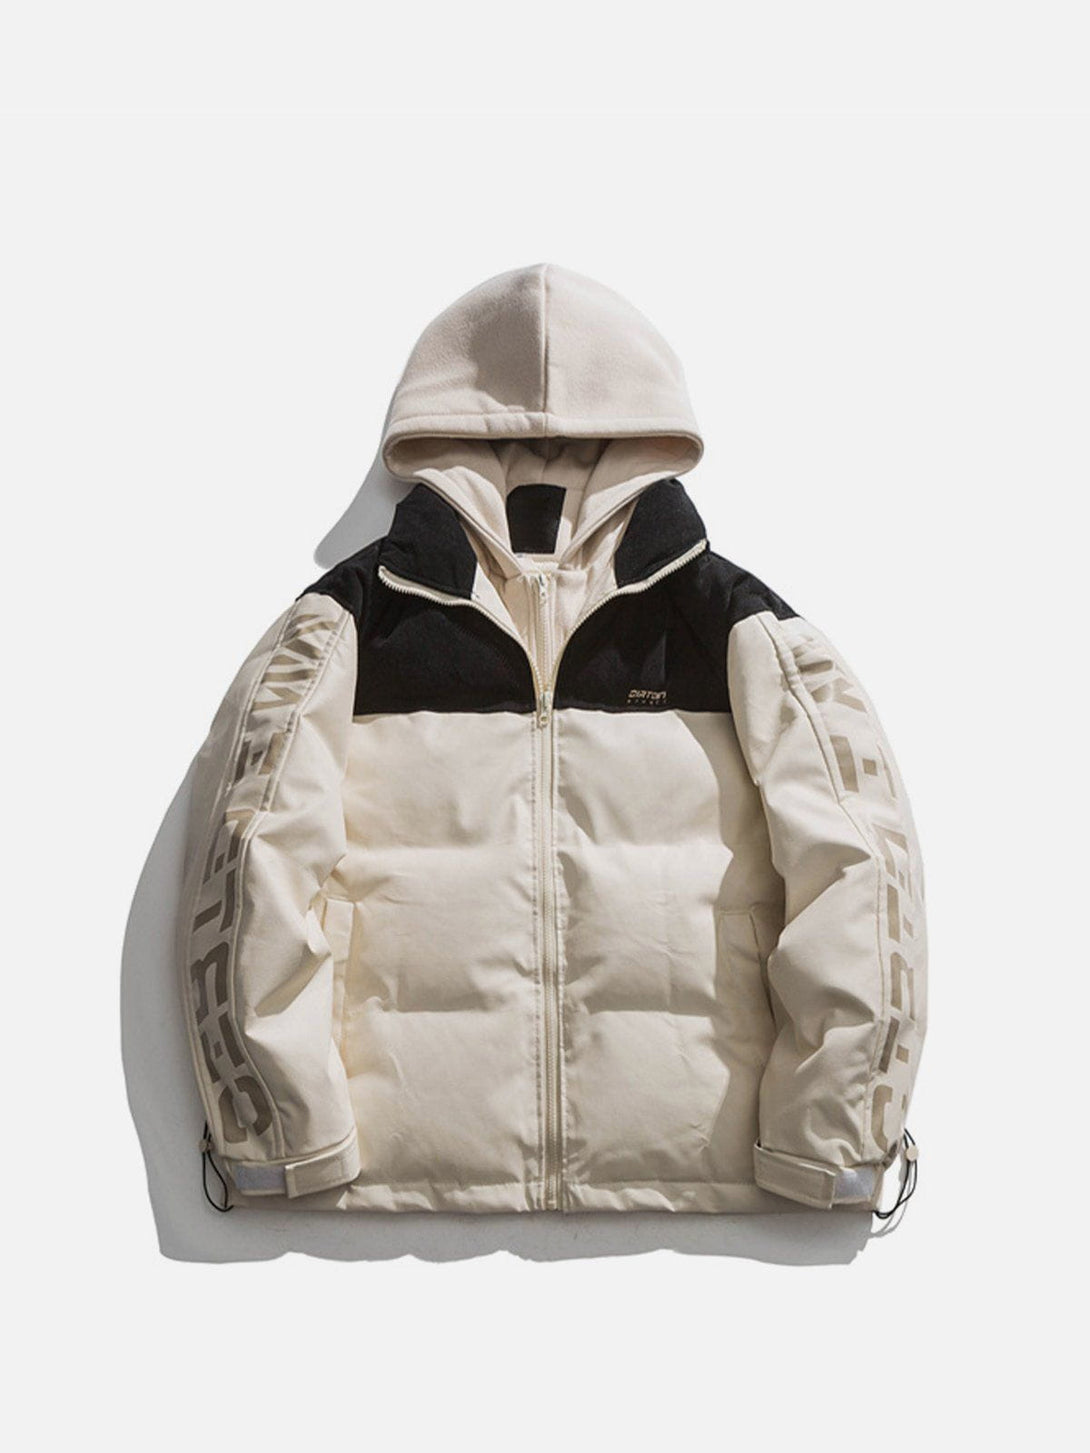 Majesda® - Patchwork Hooded Winter Coat outfit ideas, streetwear fashion - majesda.com